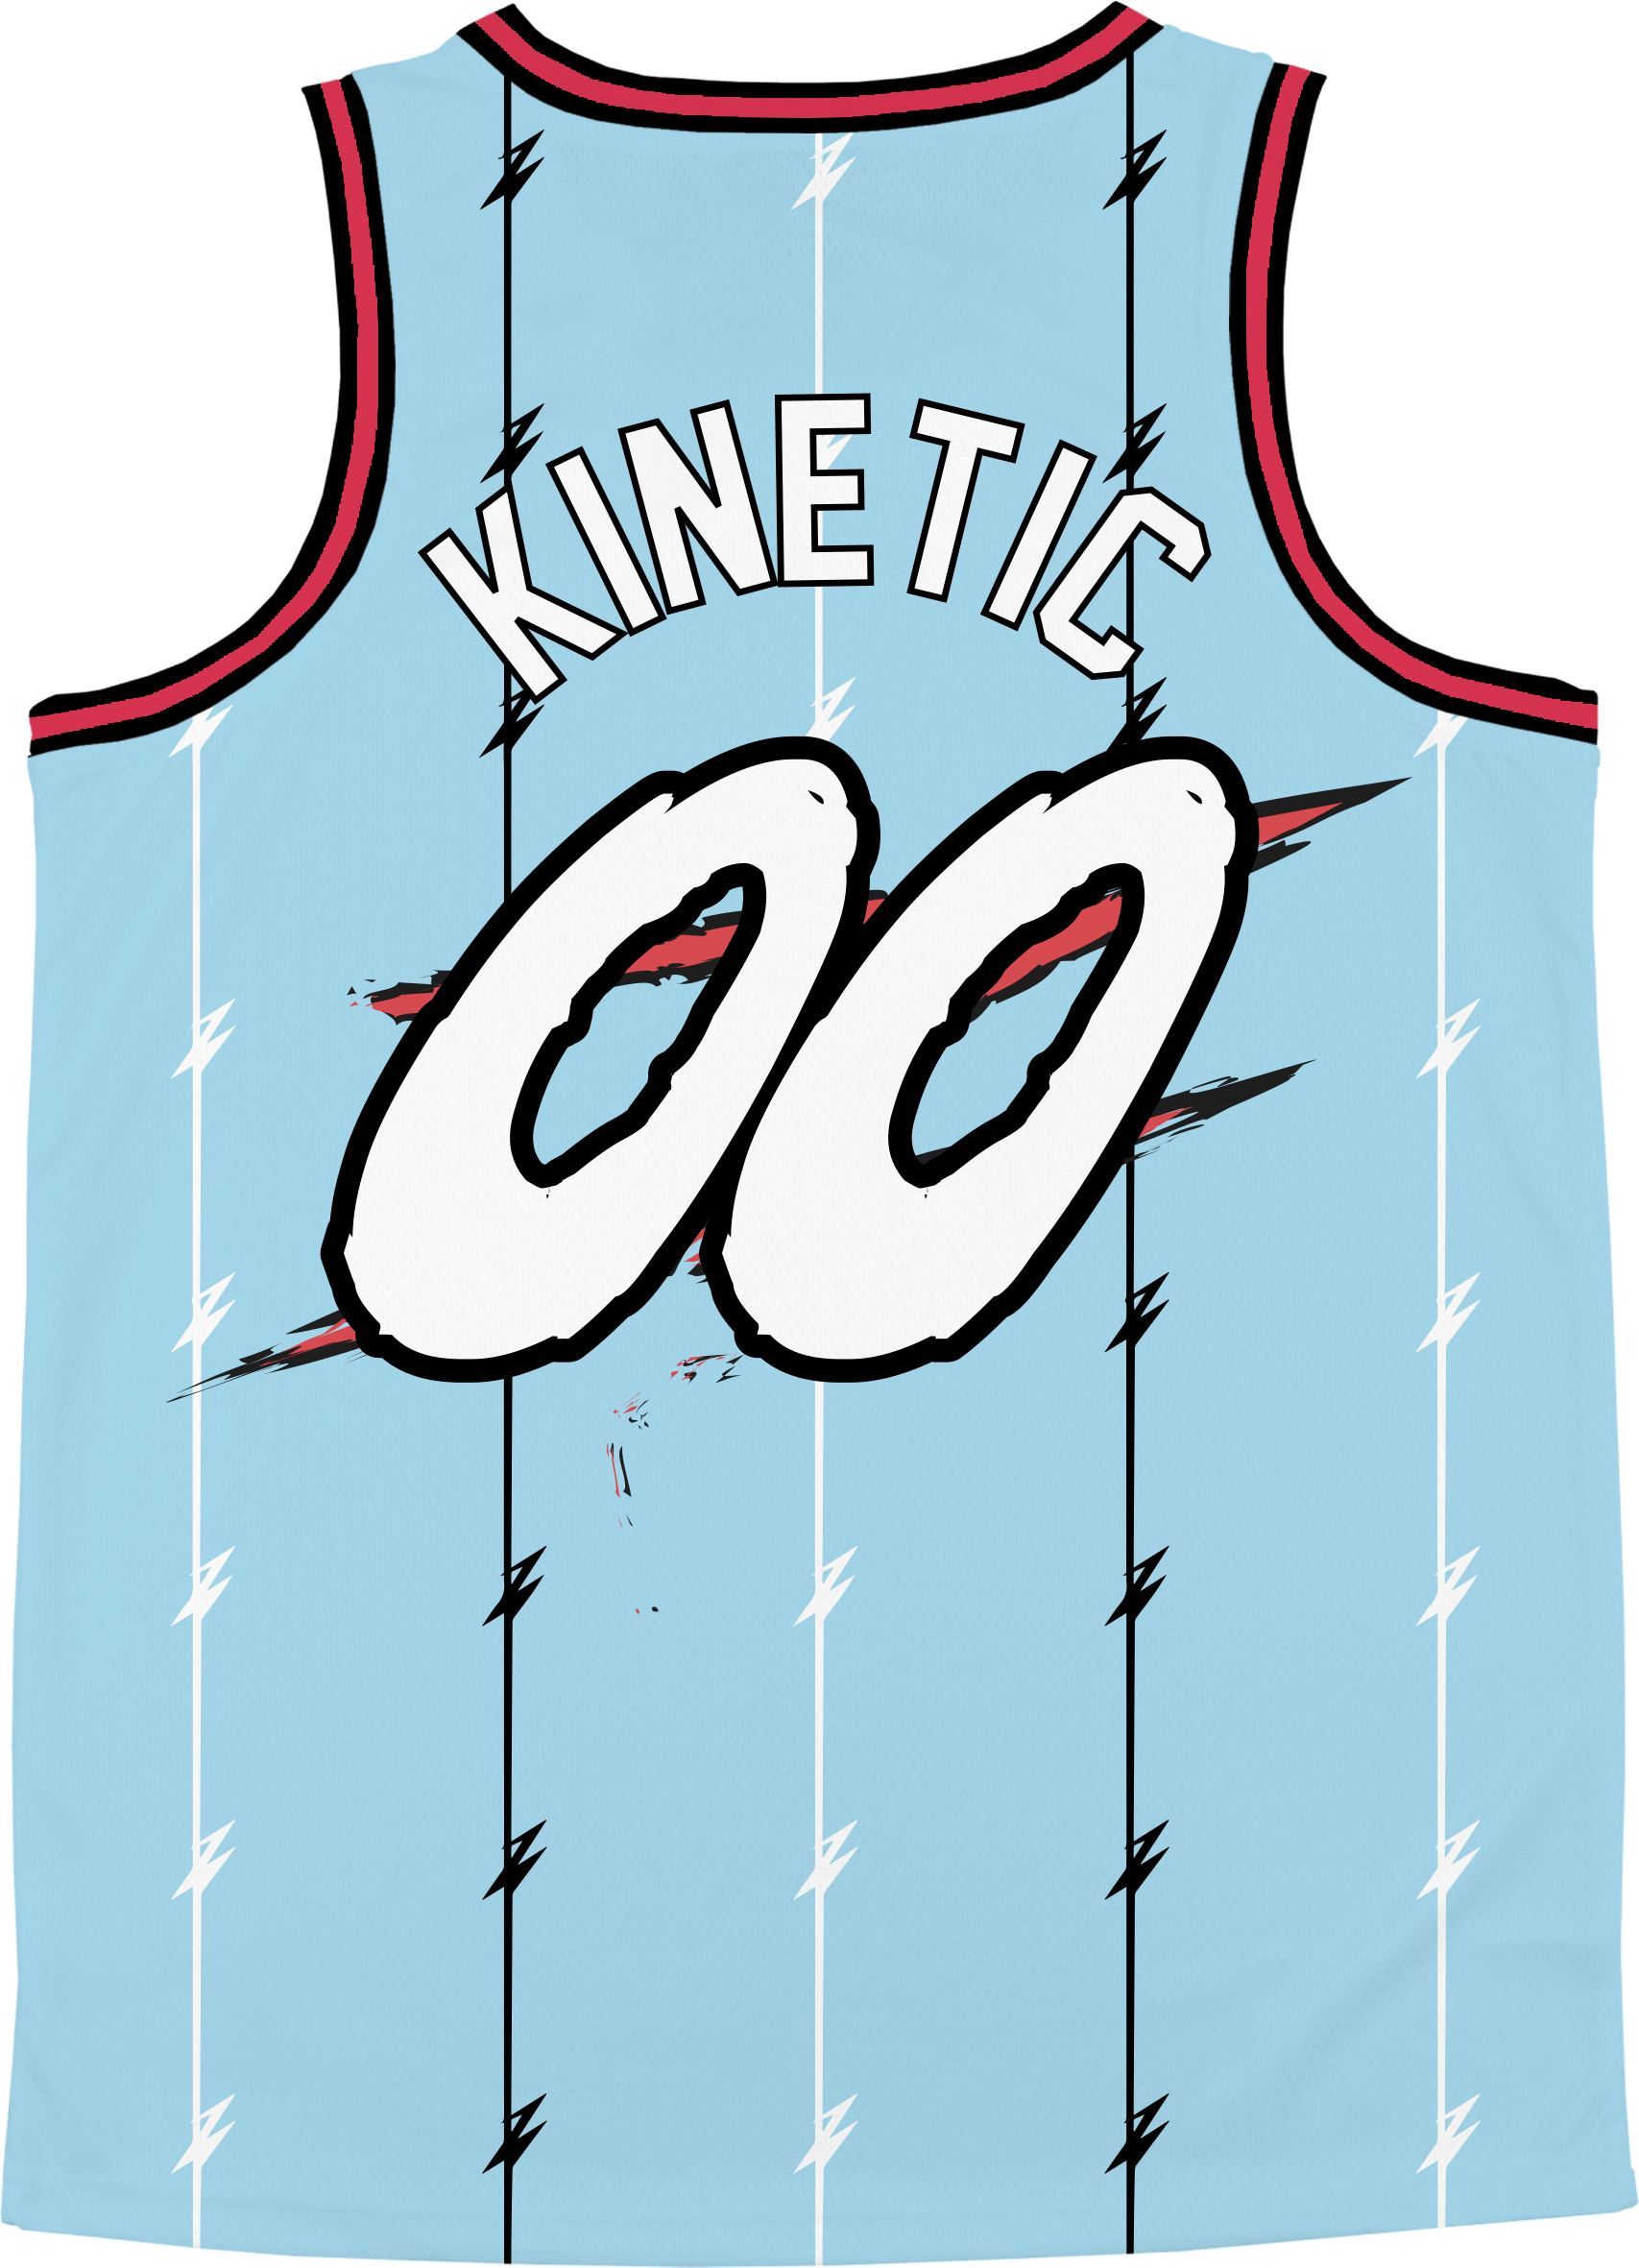 Kinetic Society LLC Sigma Chi - Retro Ballers Basketball Jersey